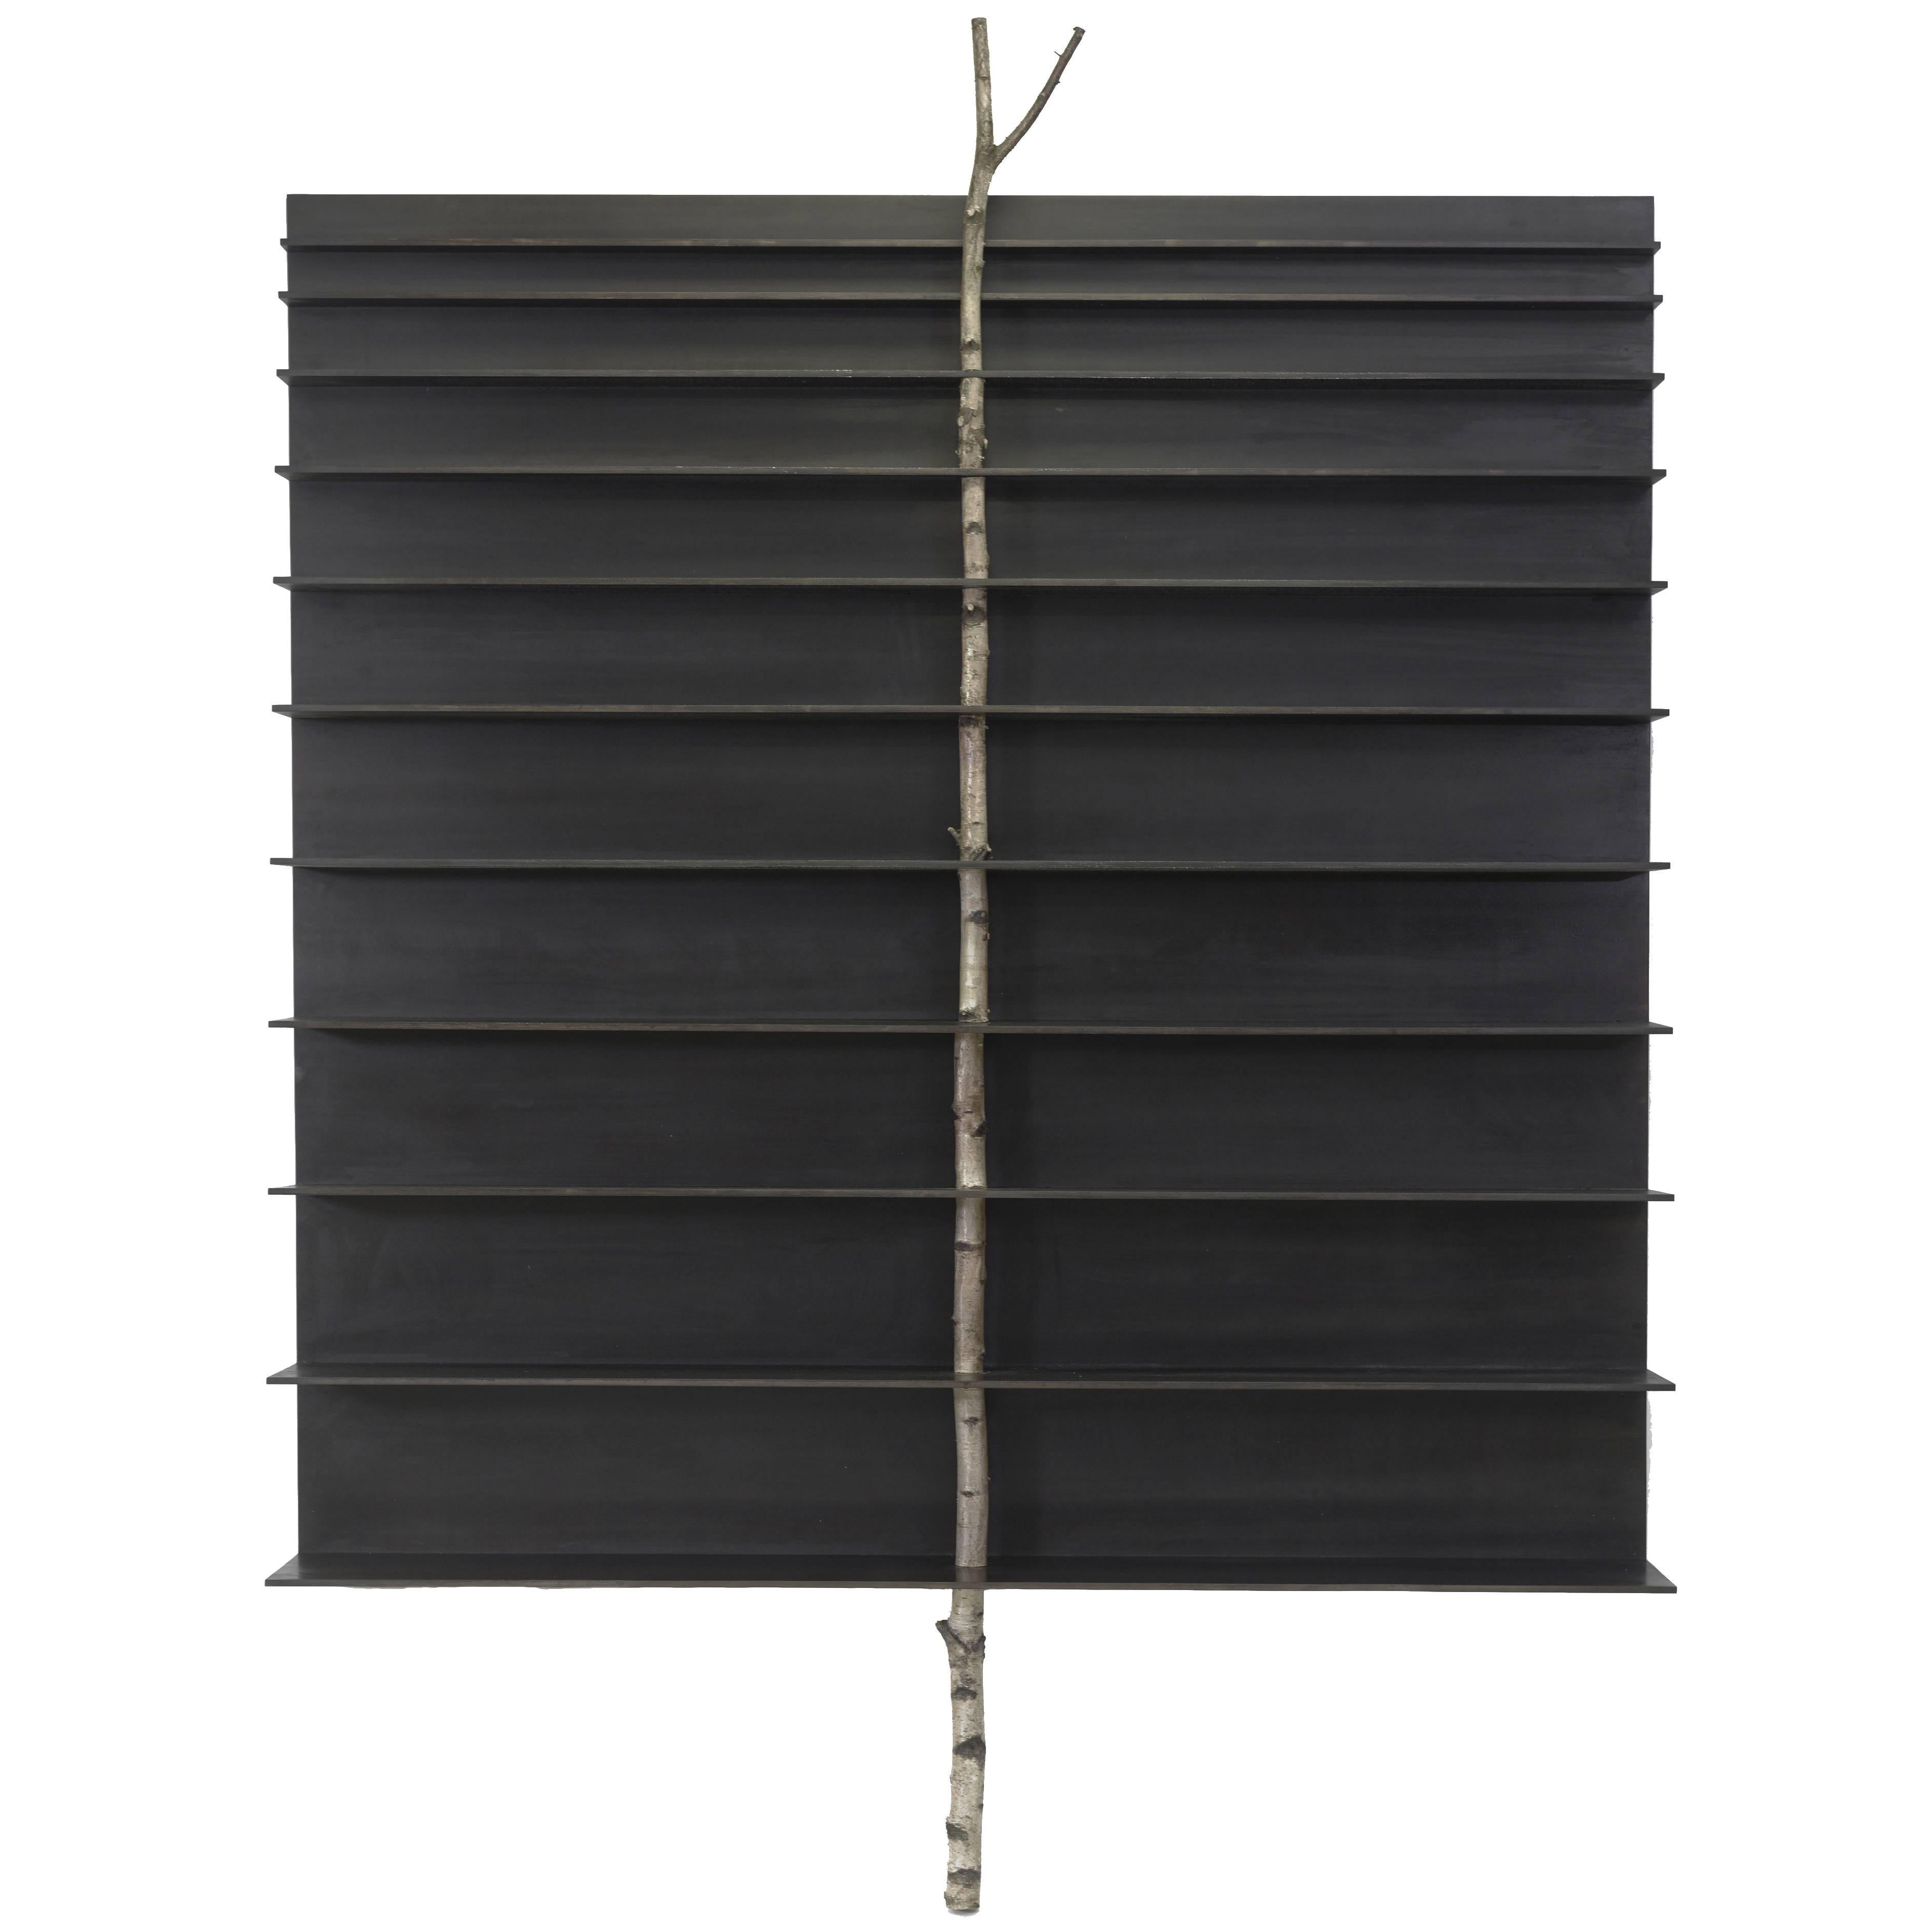 Andrea Branzi, "Tree 5" Cabinet, Bookshelf, Birch Wood, Aluminum, 2010